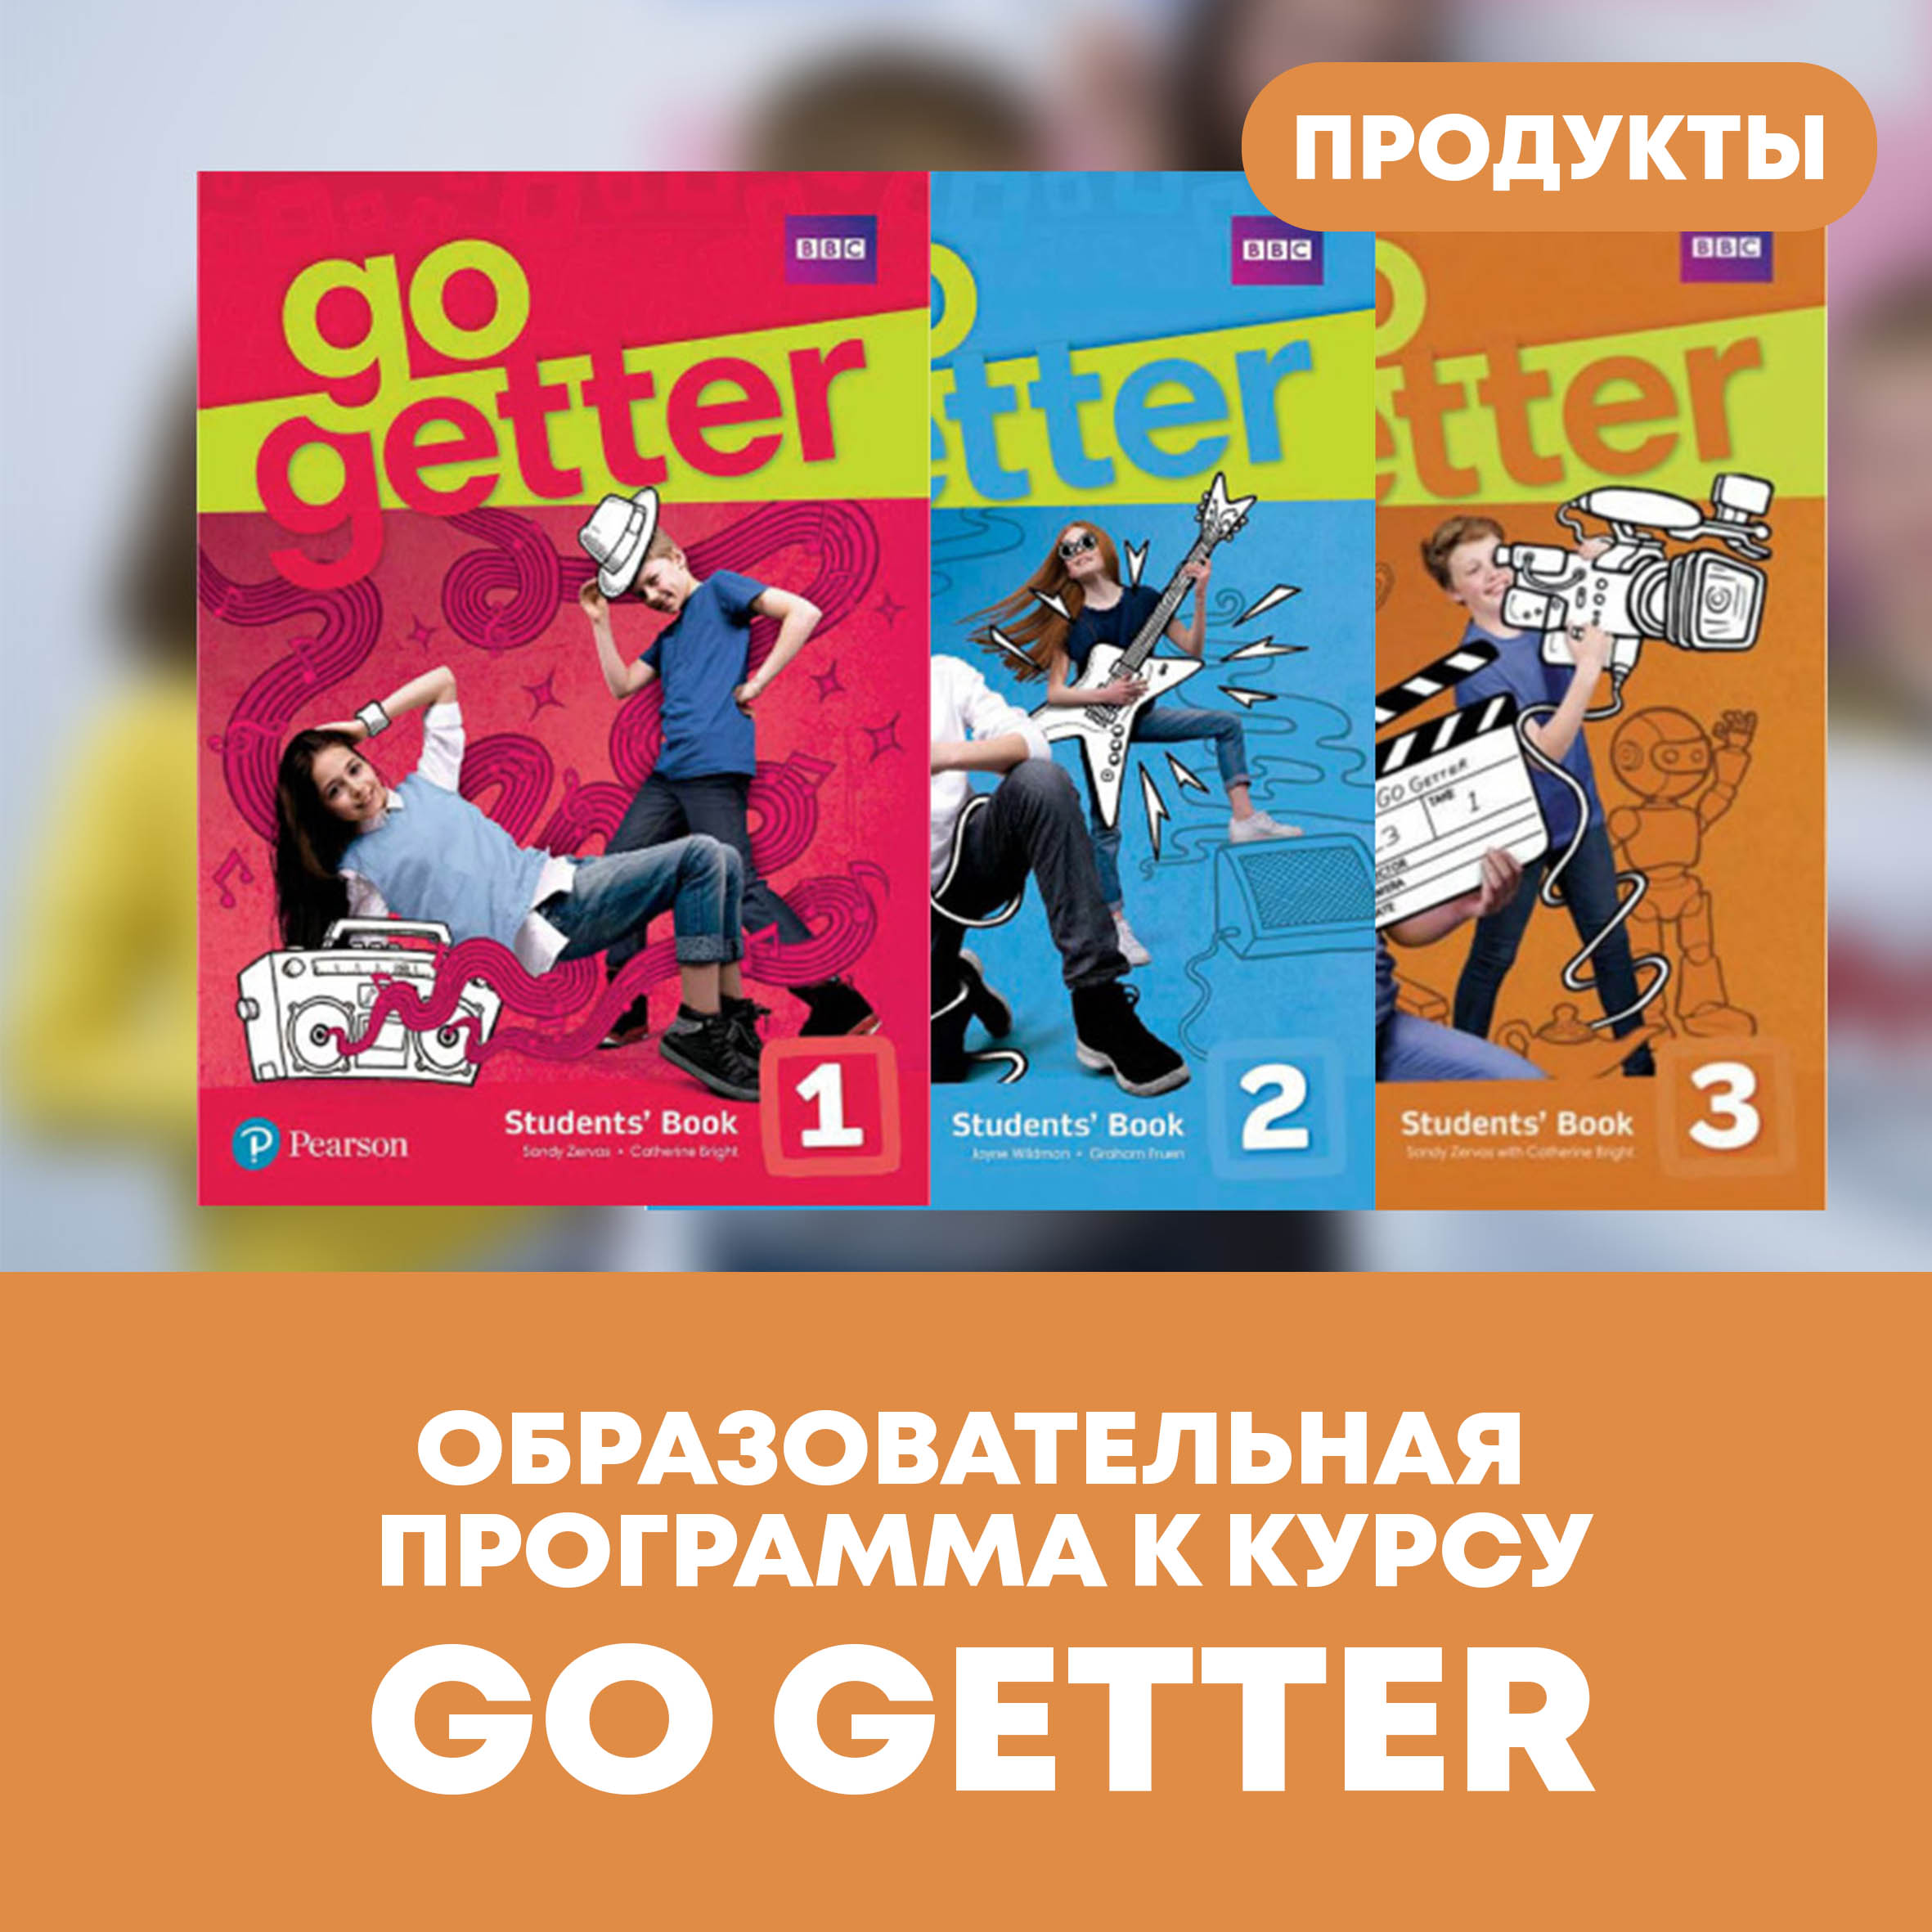 Go getter 5